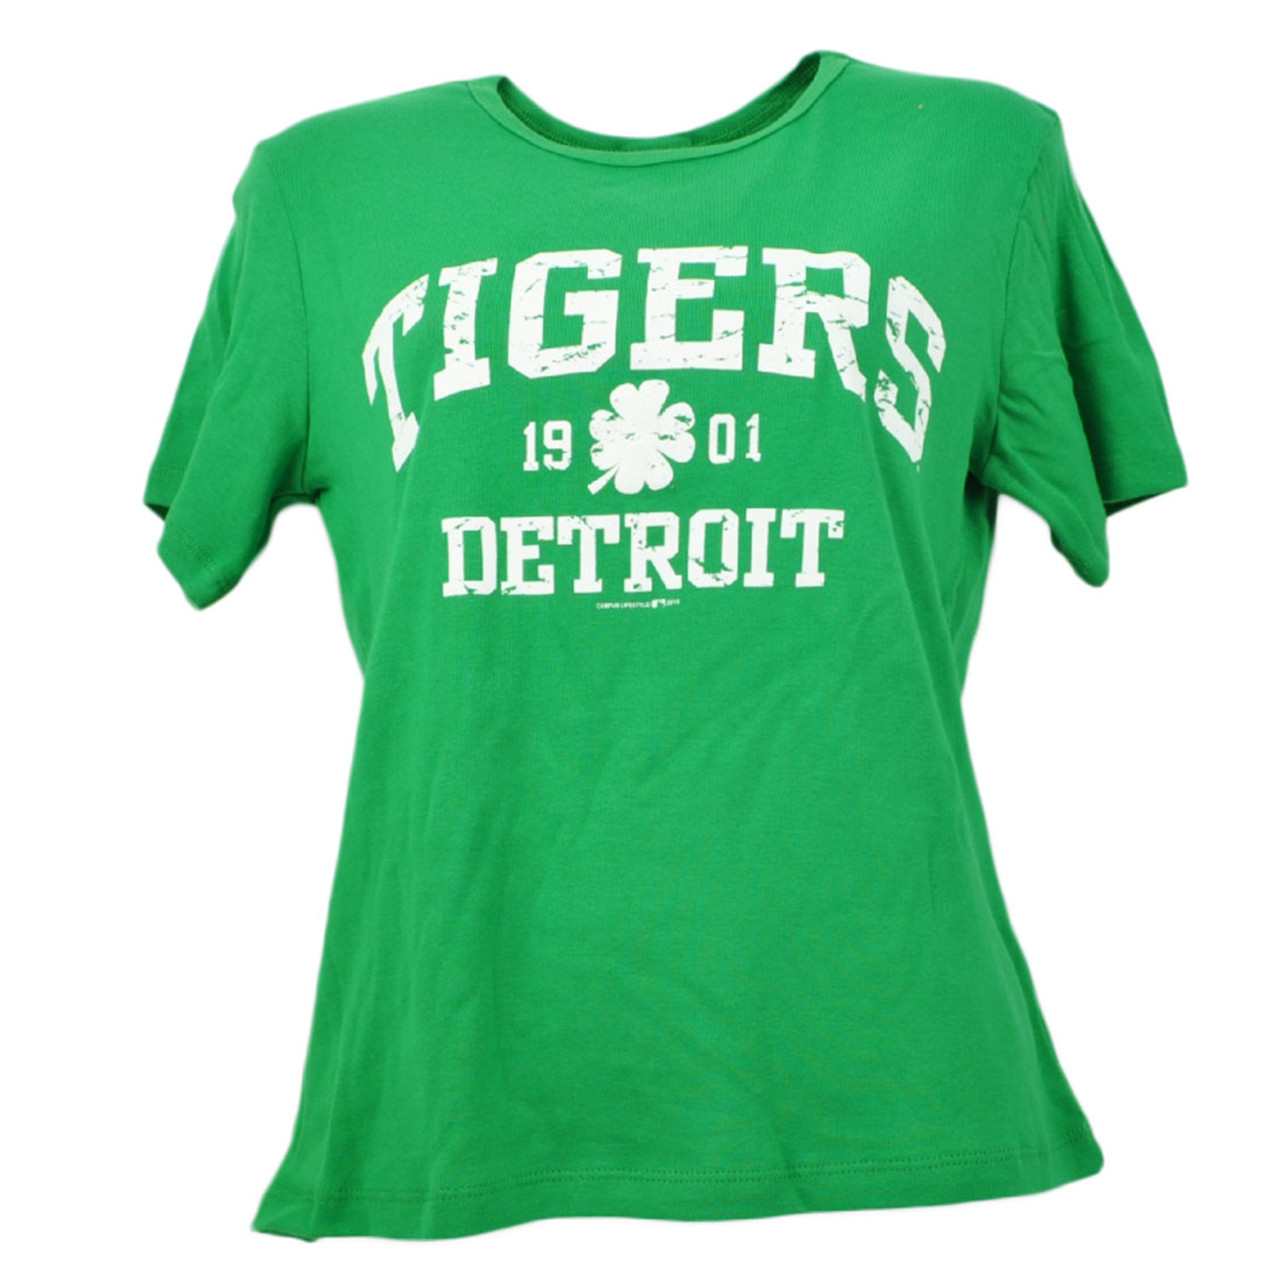 MLB Detroit Tigers Womens Green Tshirt Tee Distressed Short Sleeve